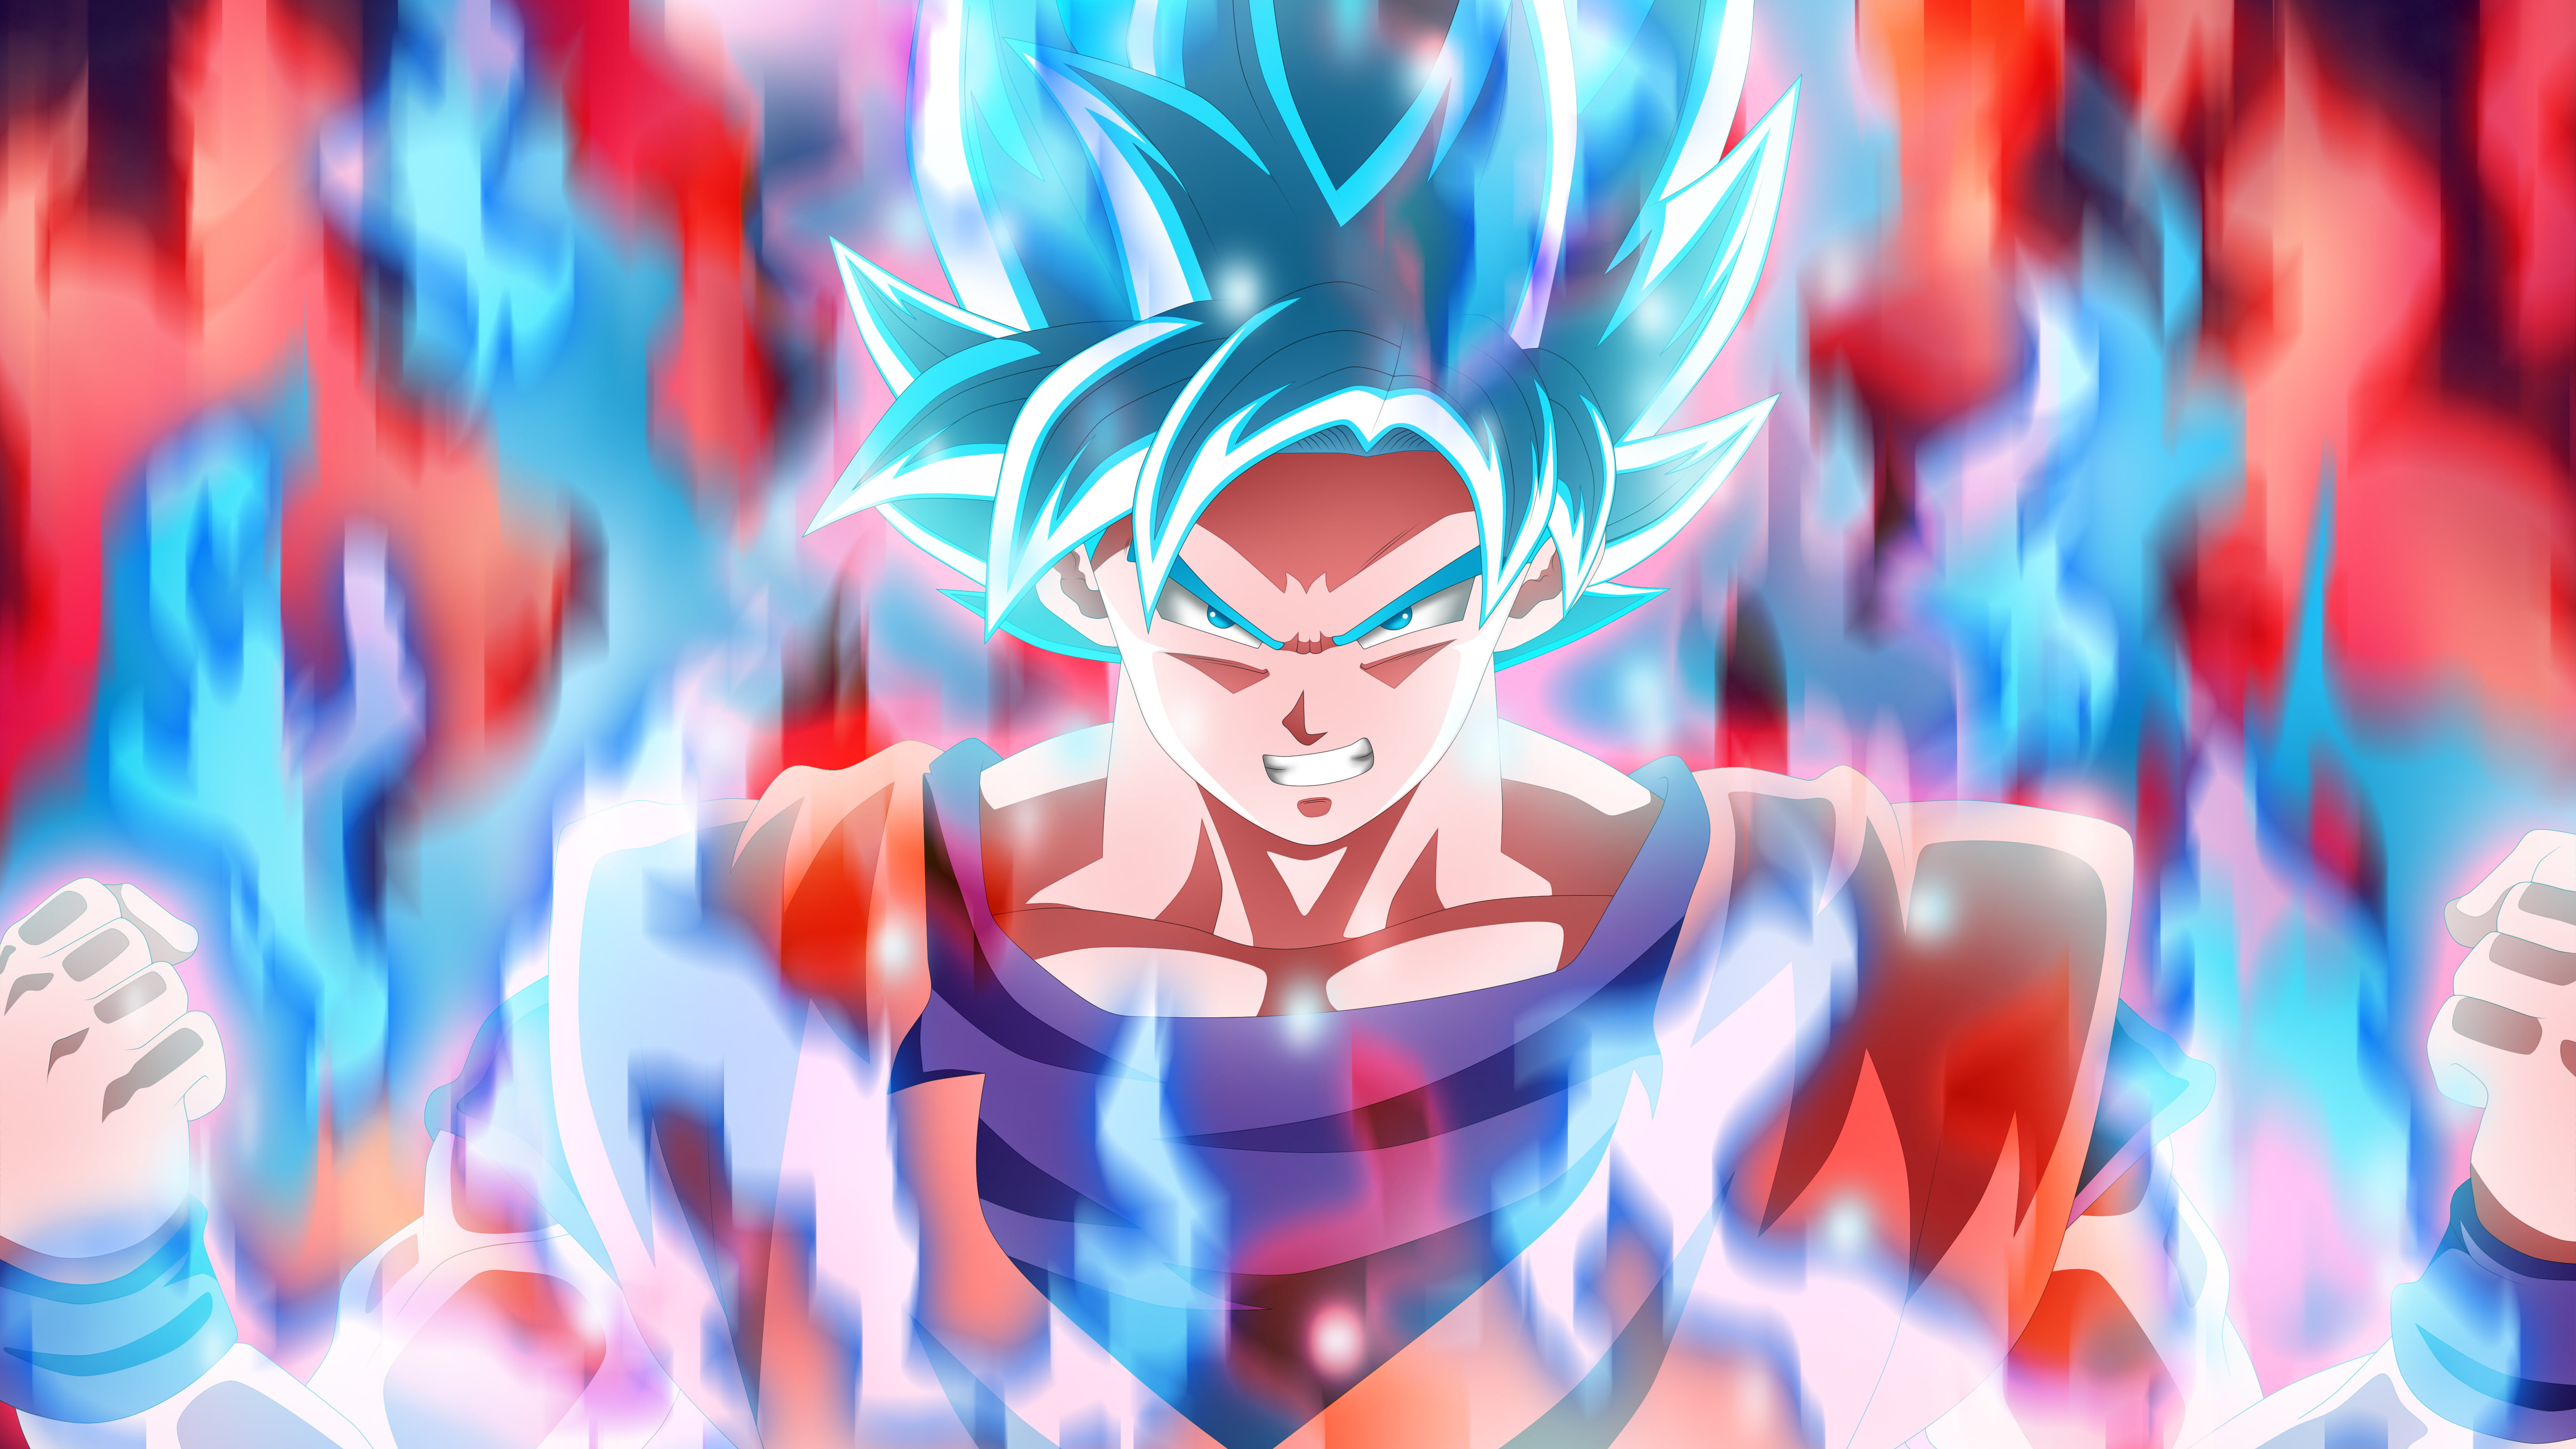 Son Goku SSJ Blue King Kai fist illustration